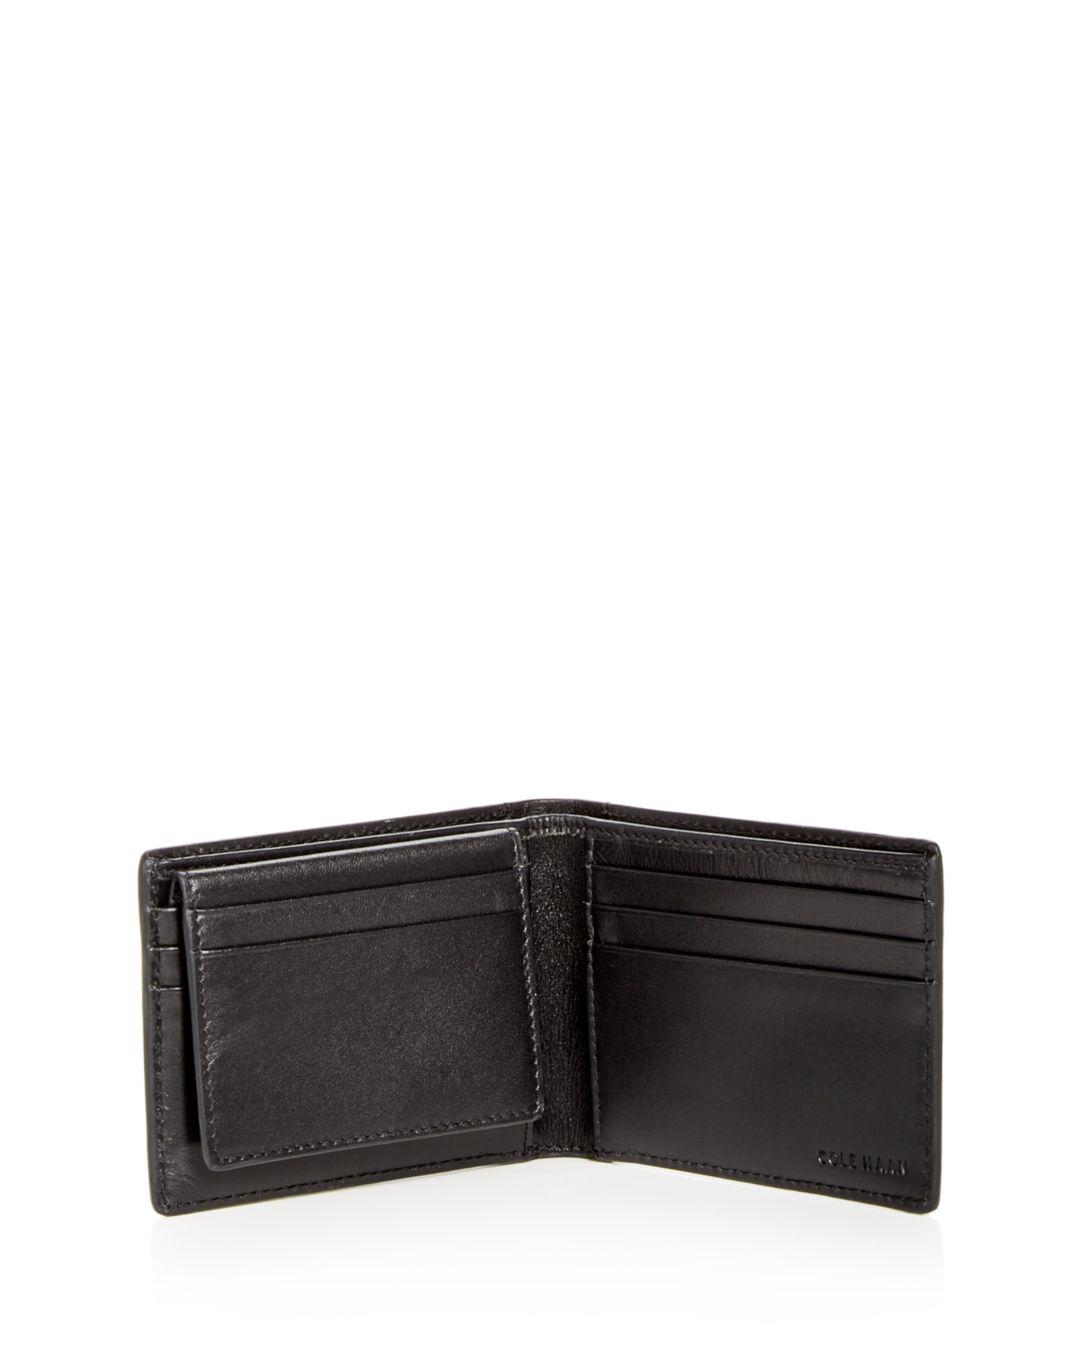 Lyst - Cole Haan Hamilton Grand Leather Bi-fold Wallet in Black for Men